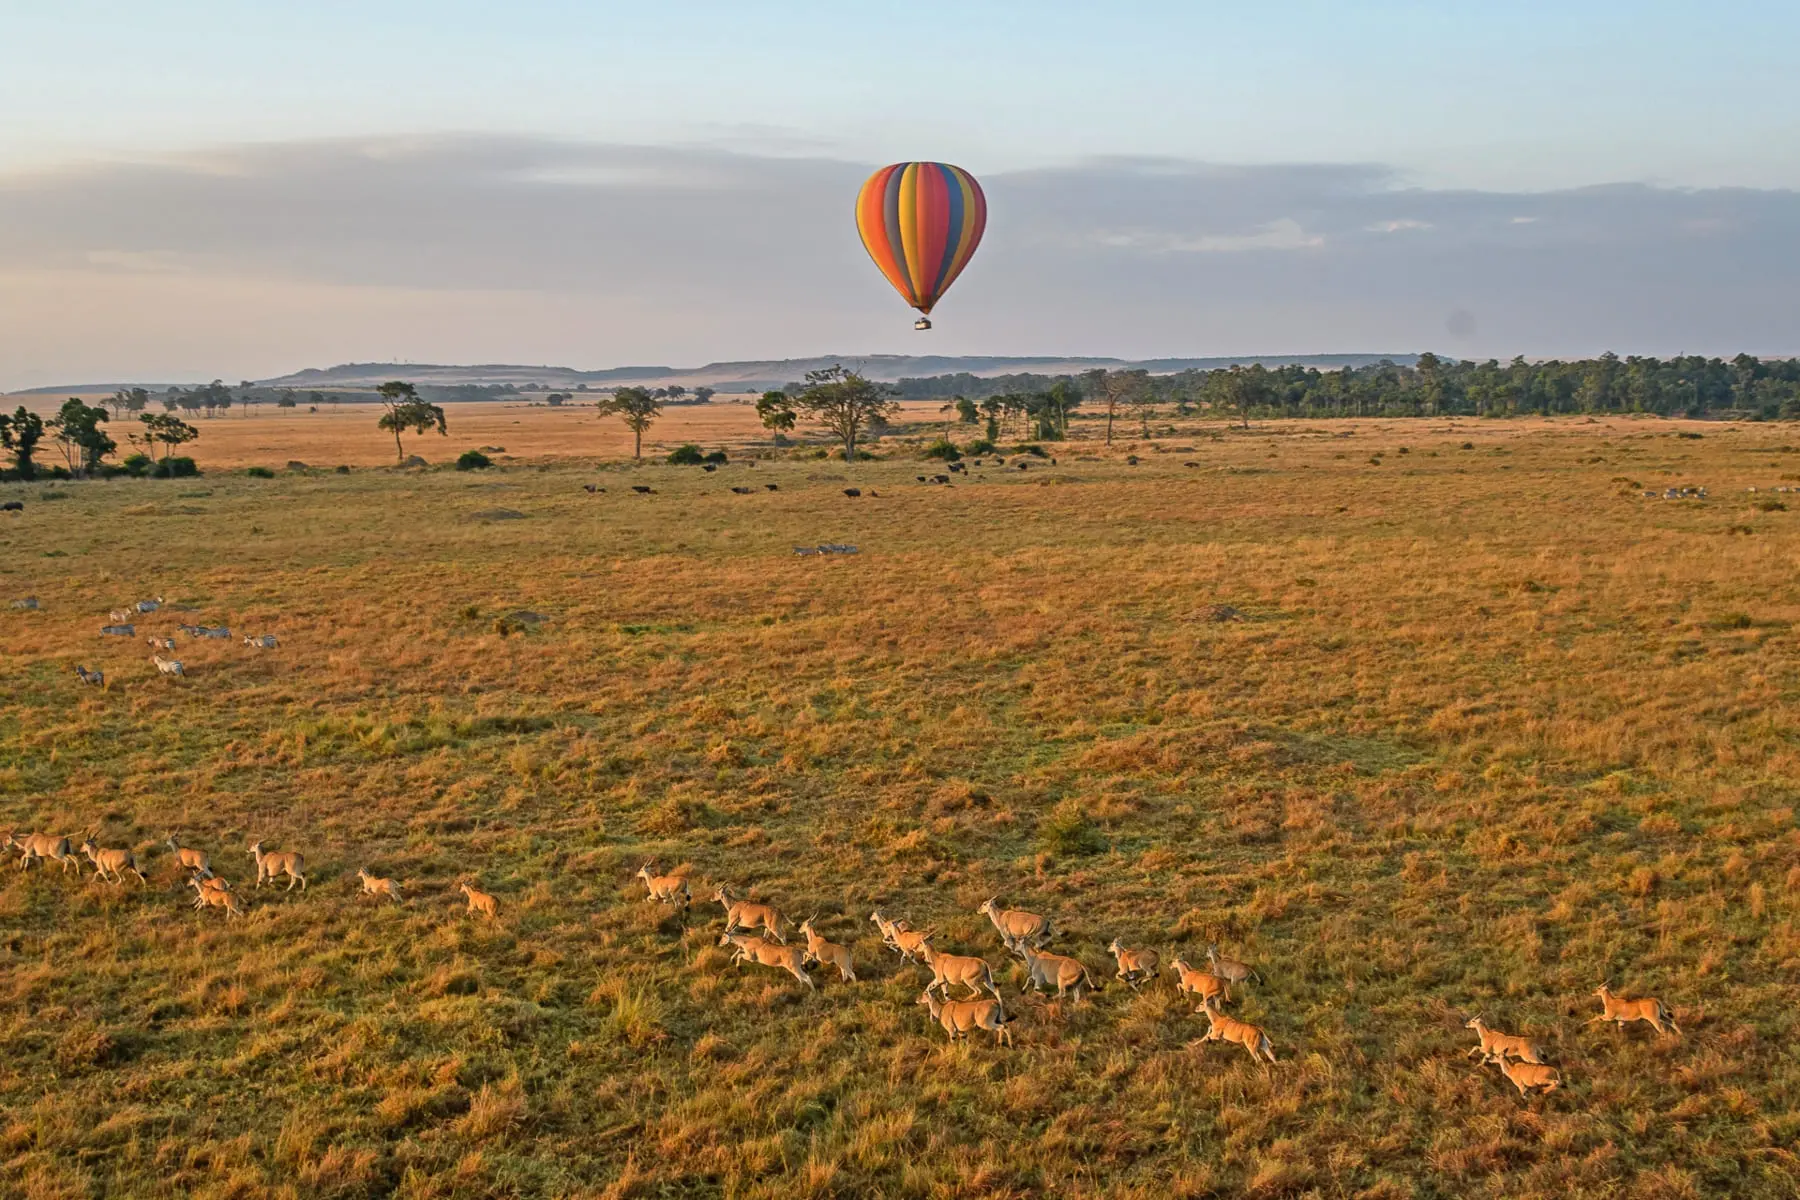 Adding extra activities to Kenya Safari packages prices - air balloon safari over the Masai Mara